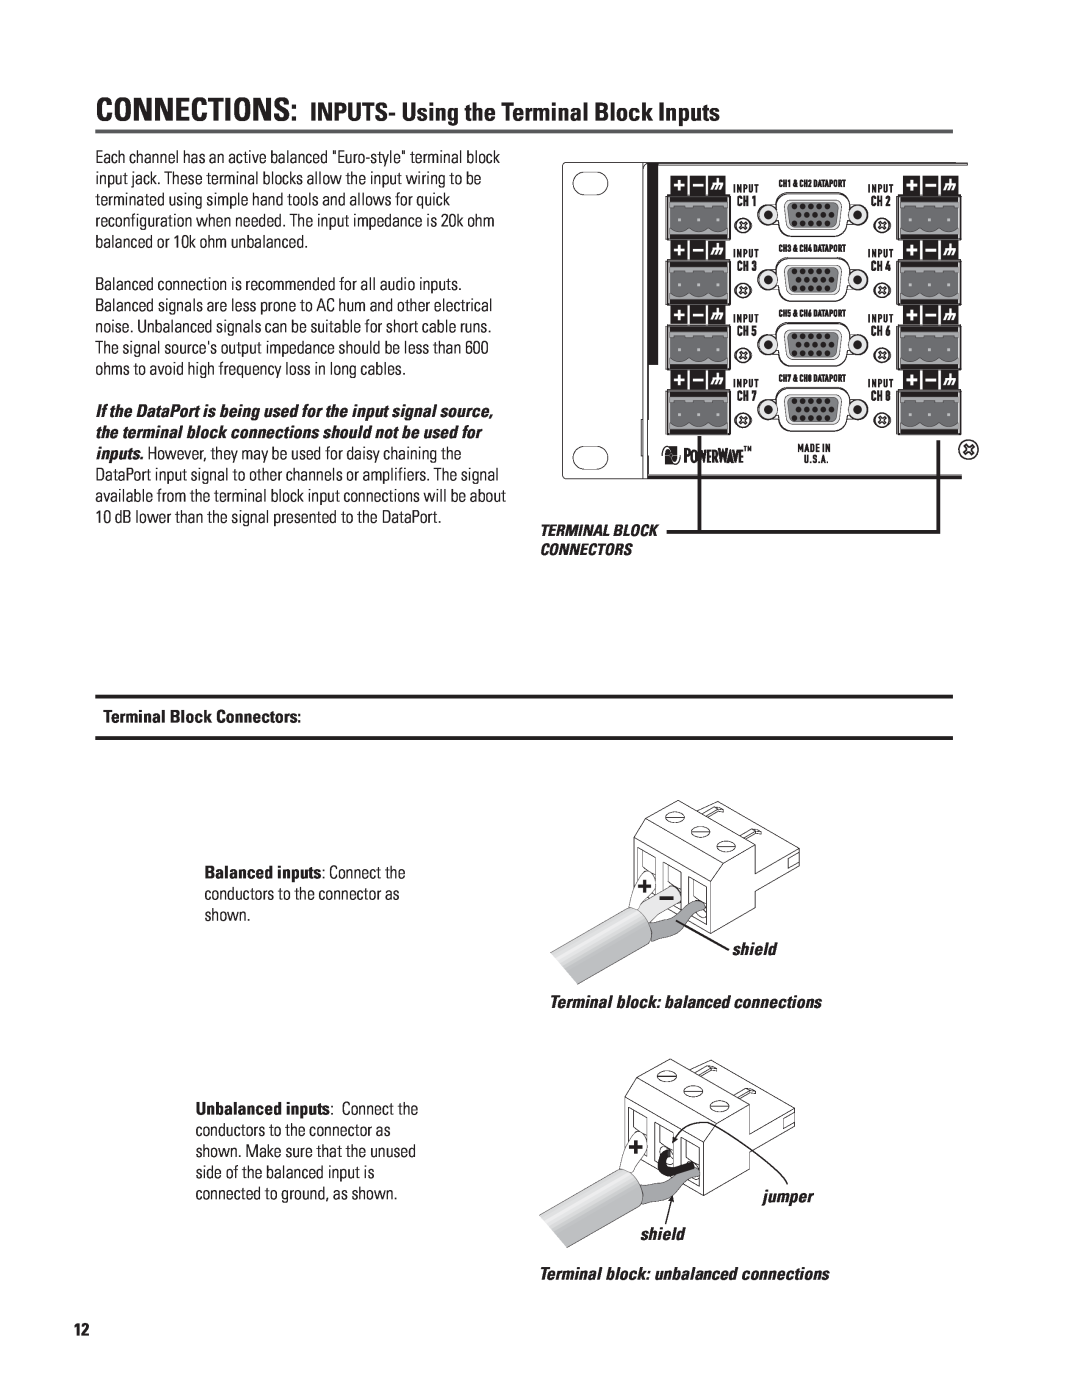 QSC Audio CX168 user manual Terminal Block Connectors, shield Terminal block balanced connections, jumper shield 